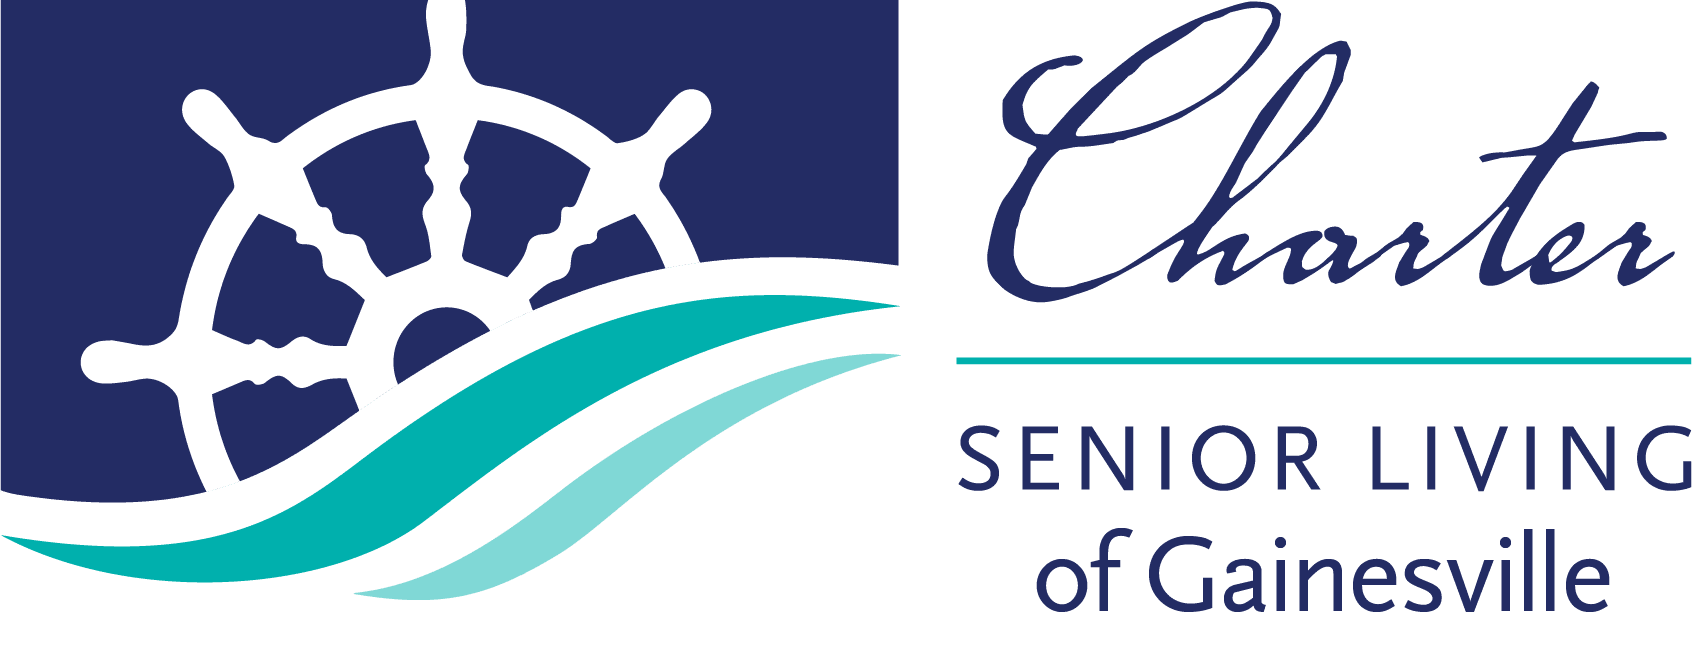 Charter Senior Living of Gainesville Logo Color